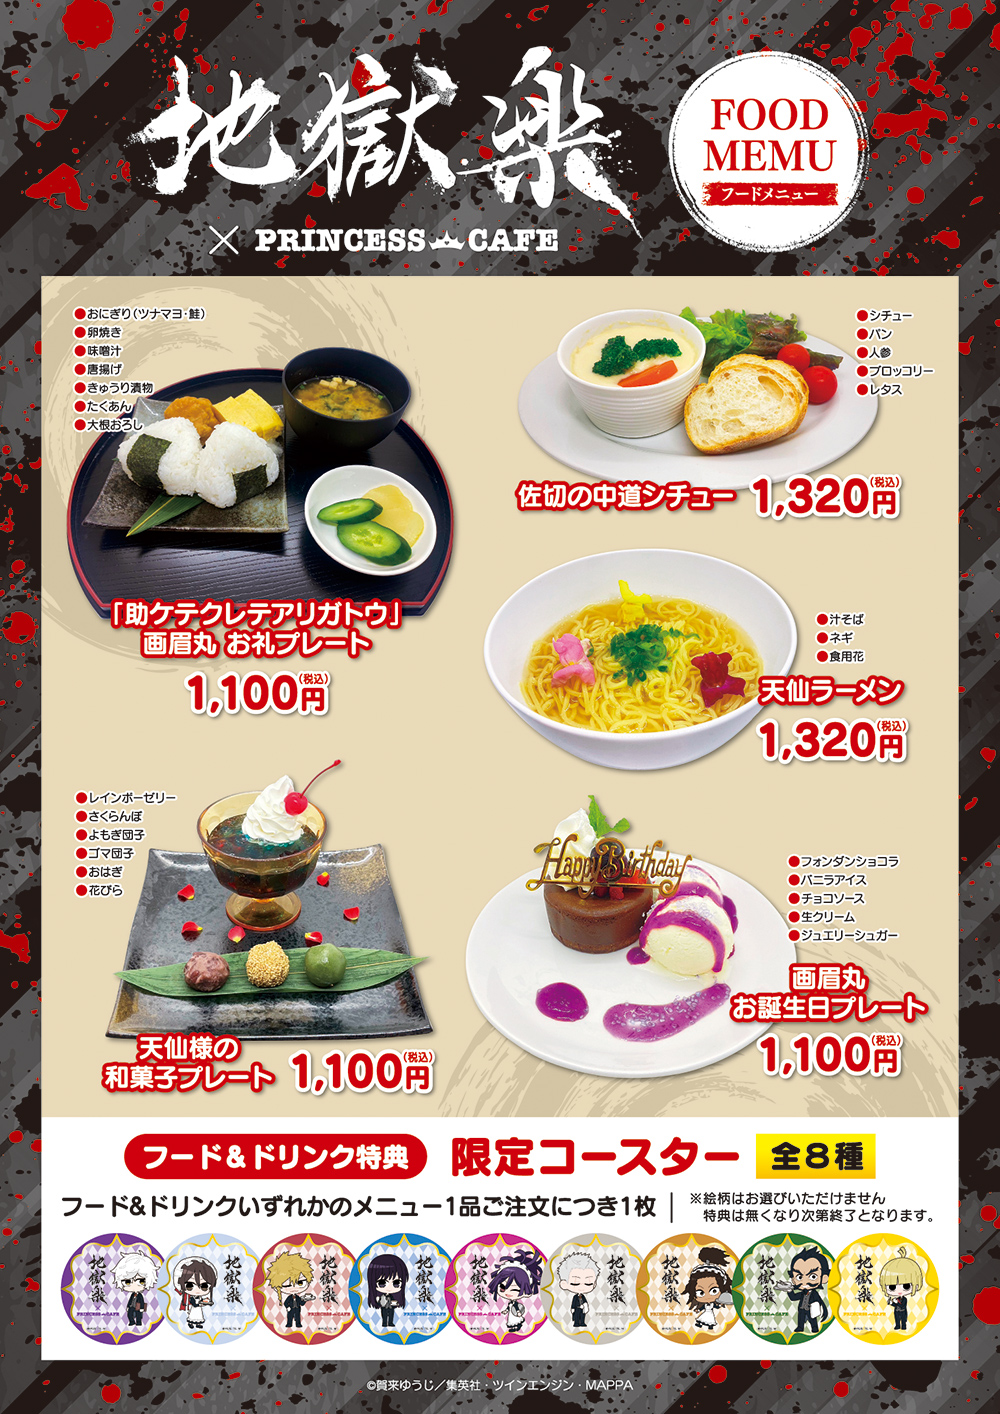 Hell's Paradise : Jigokuraku Cafe 2023 Limited Gabimaru Shikishi Japan New